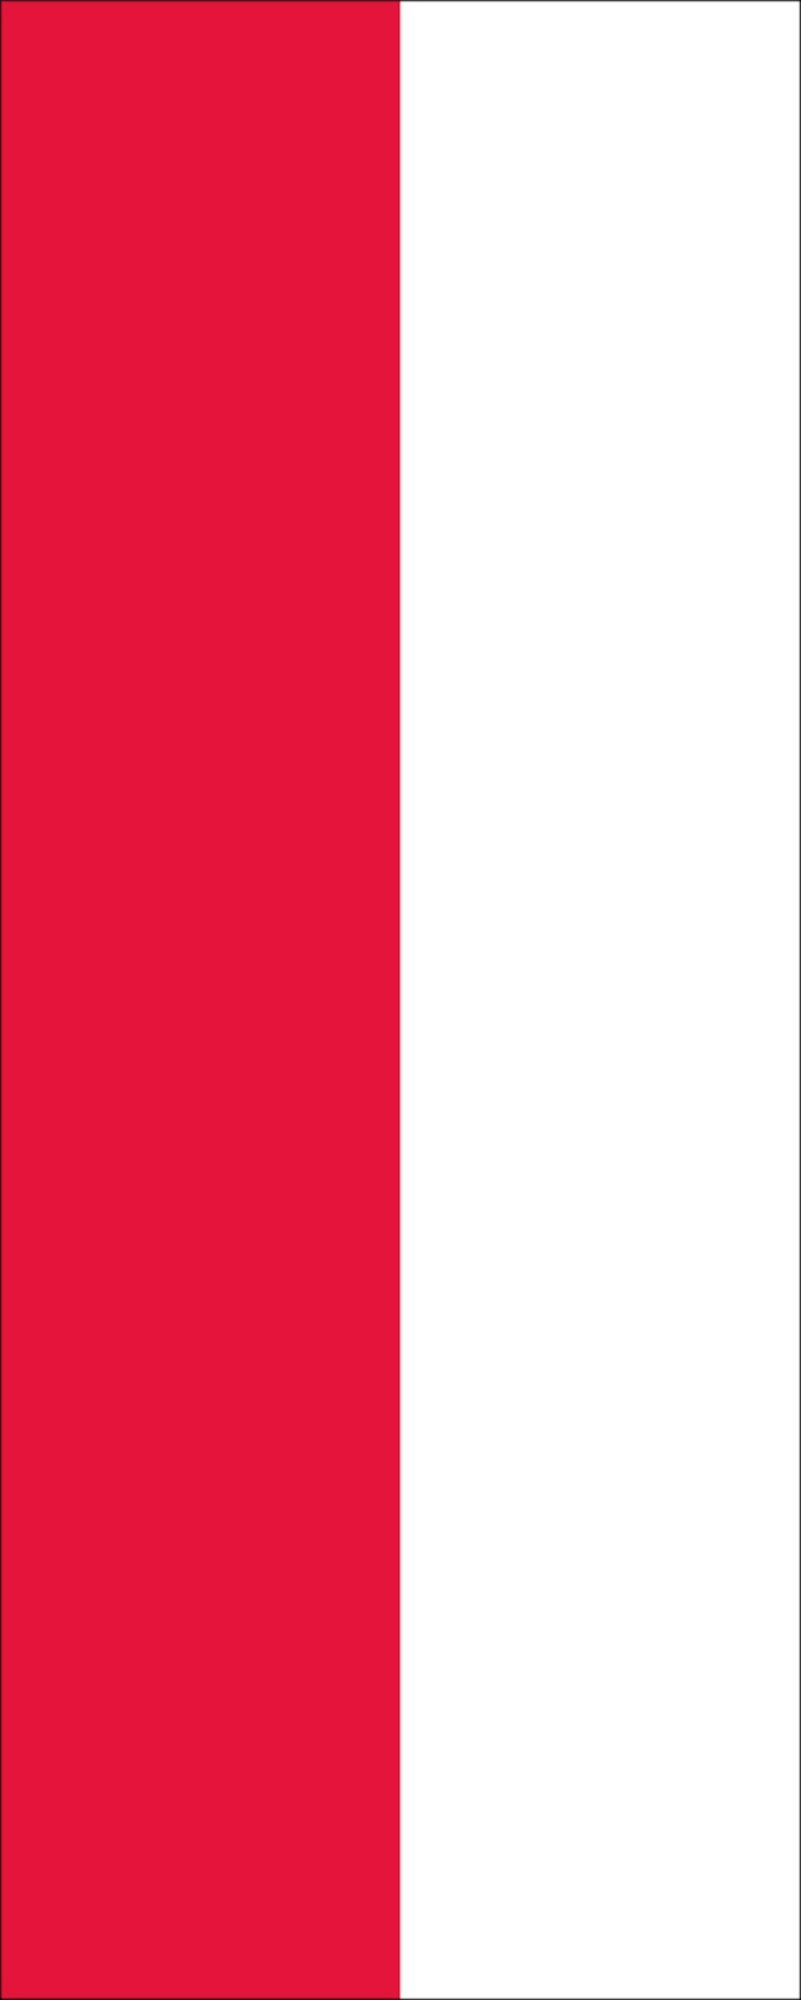 g/m² Hochformat Flagge Flagge Monaco flaggenmeer 110